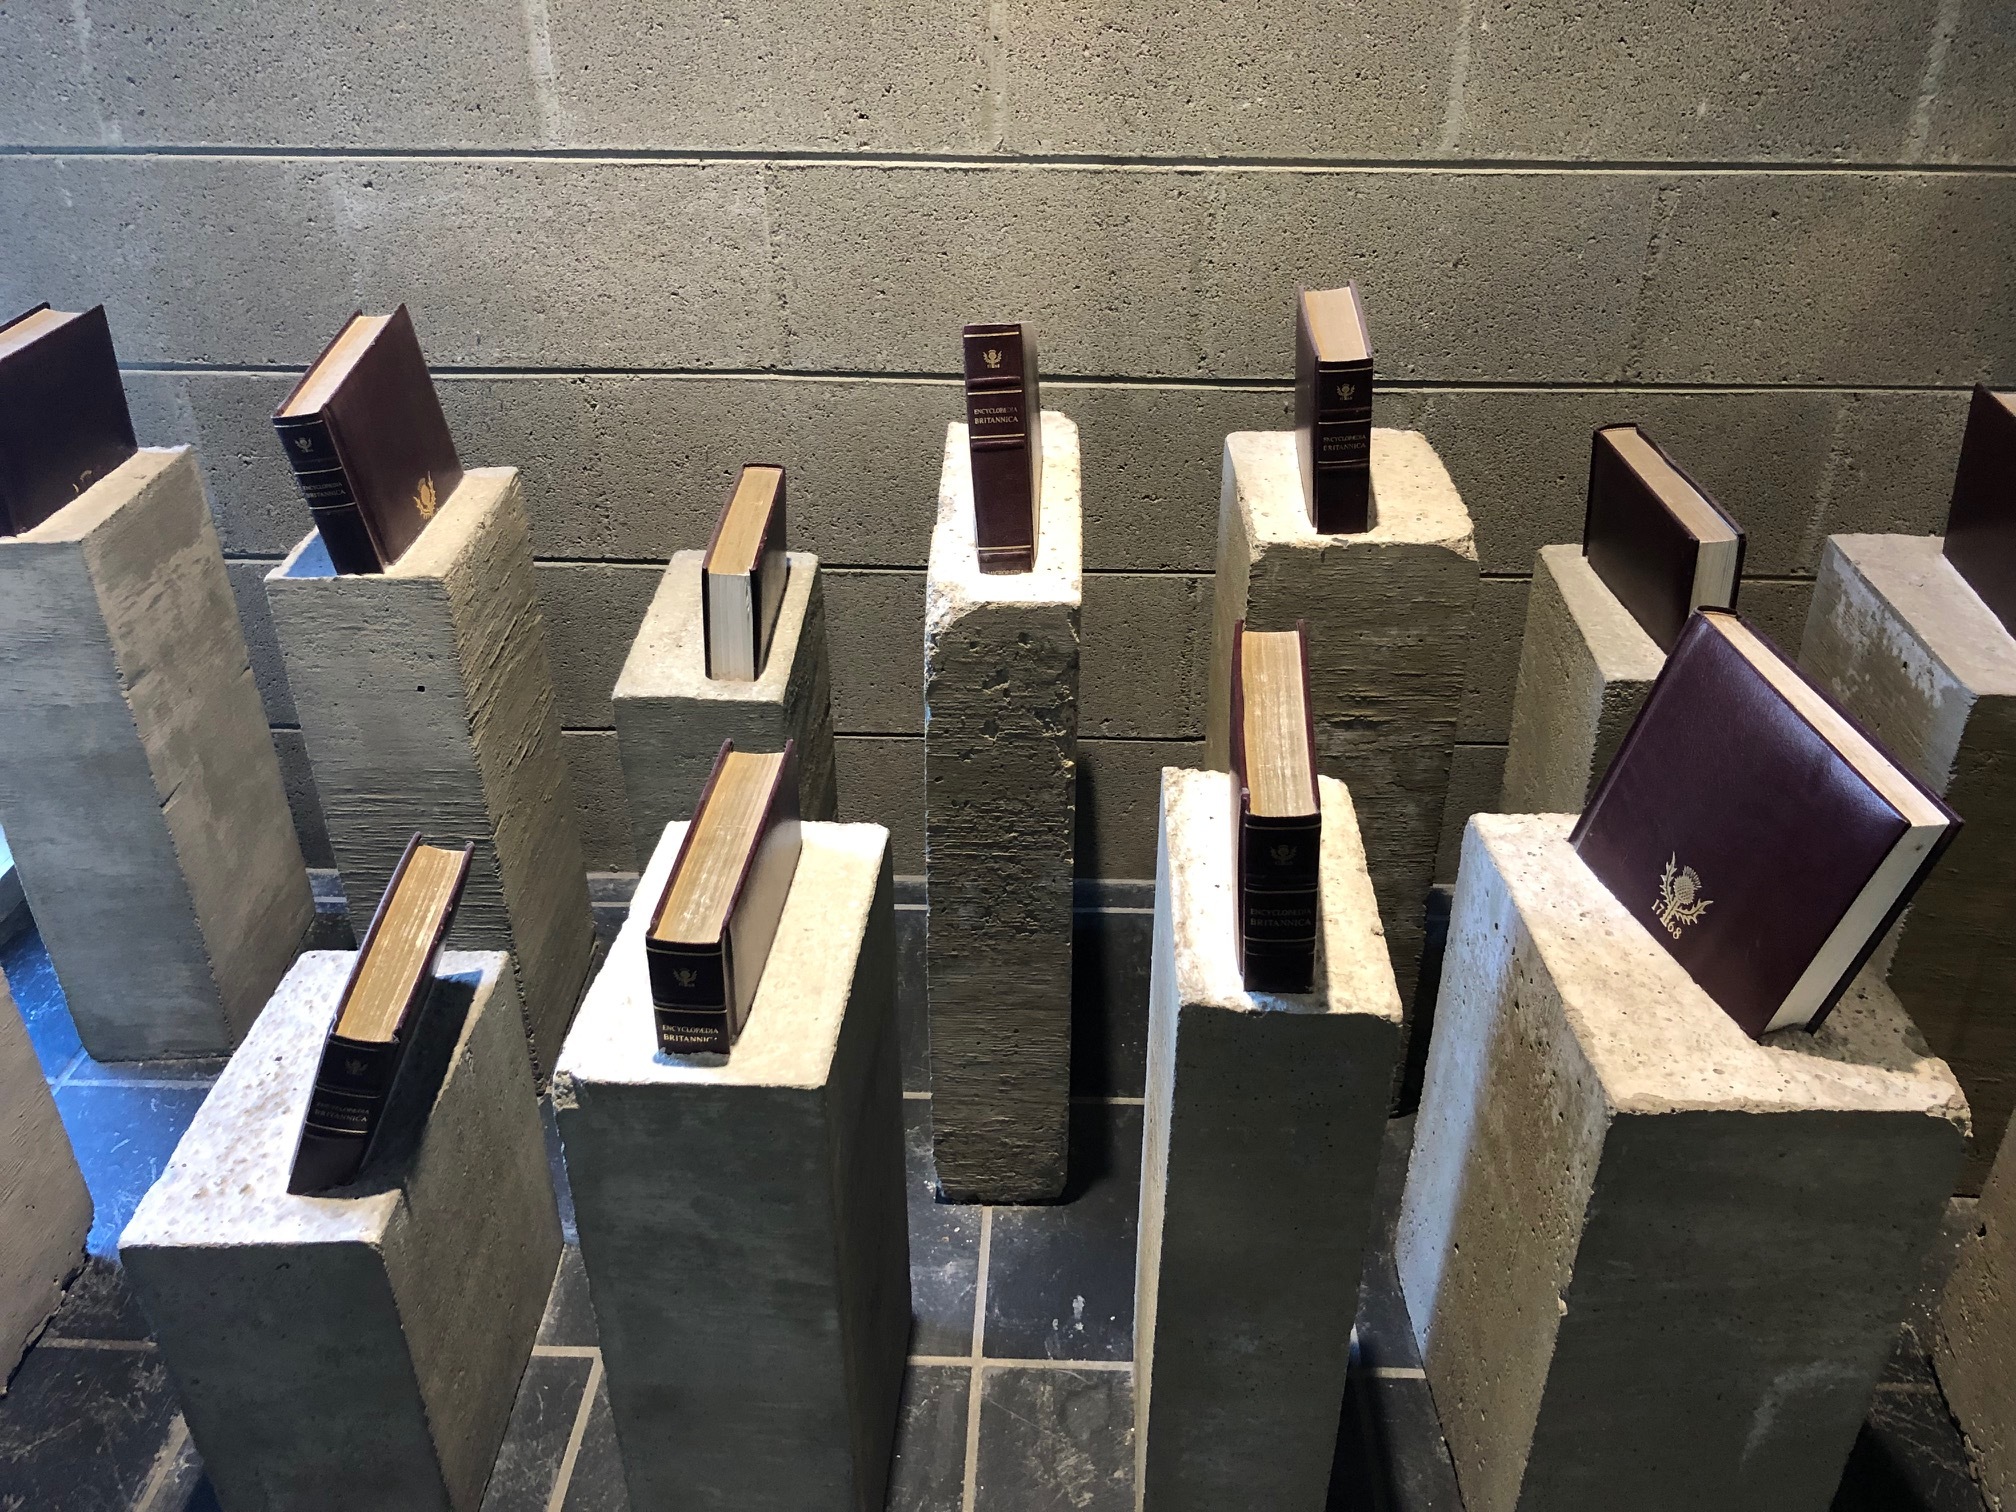 Books in blocks